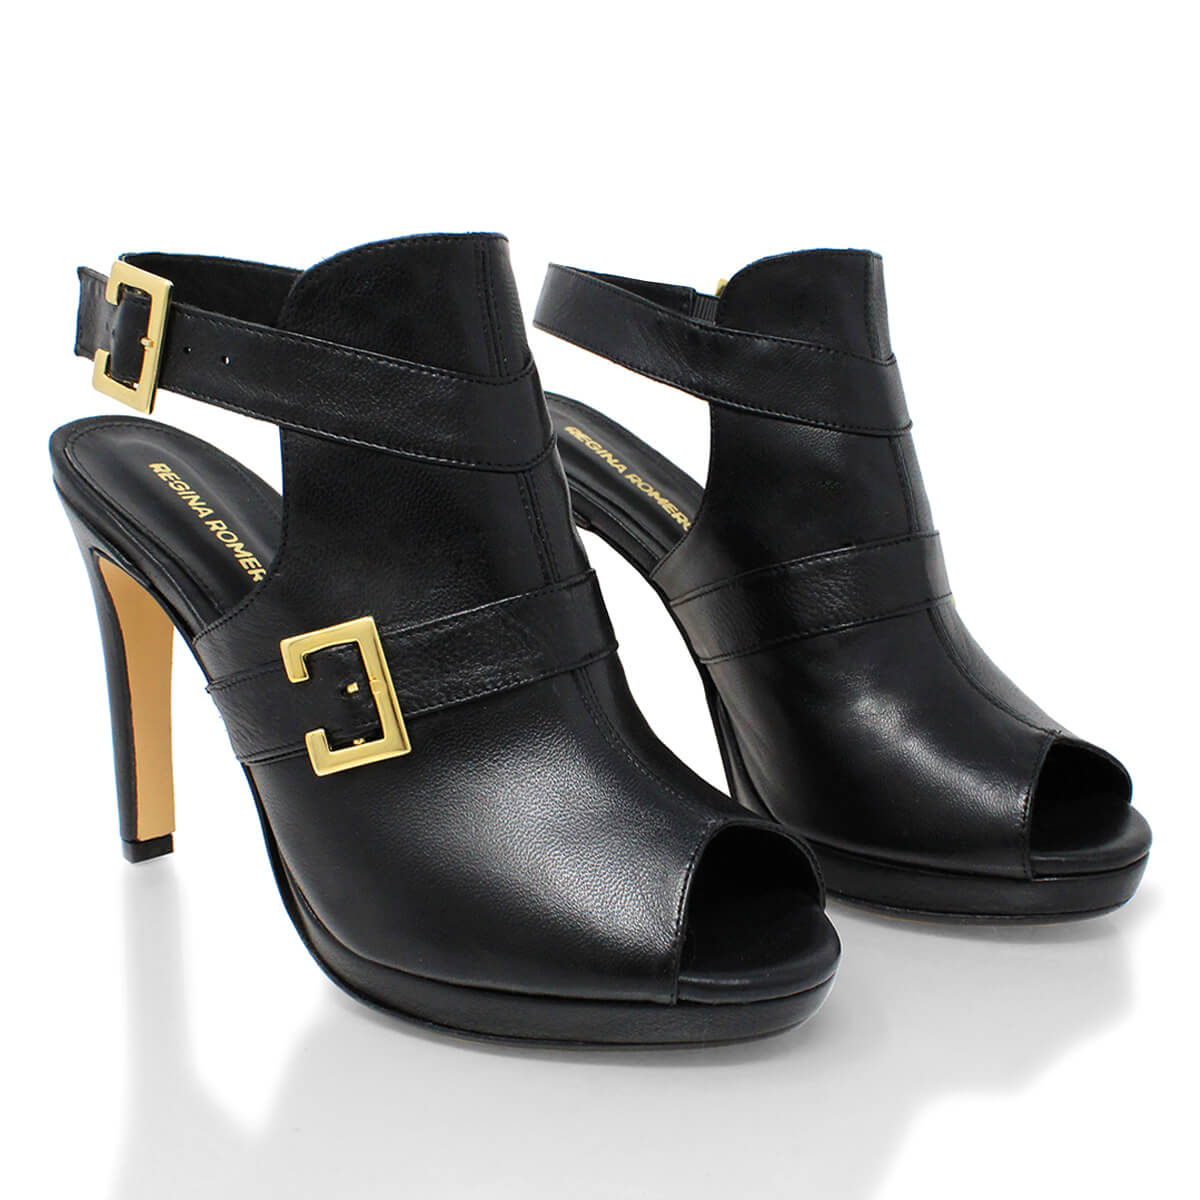 MARISA 105 - Black Regina Romero High Heel Ankle Boot Shoe for Women in Leather